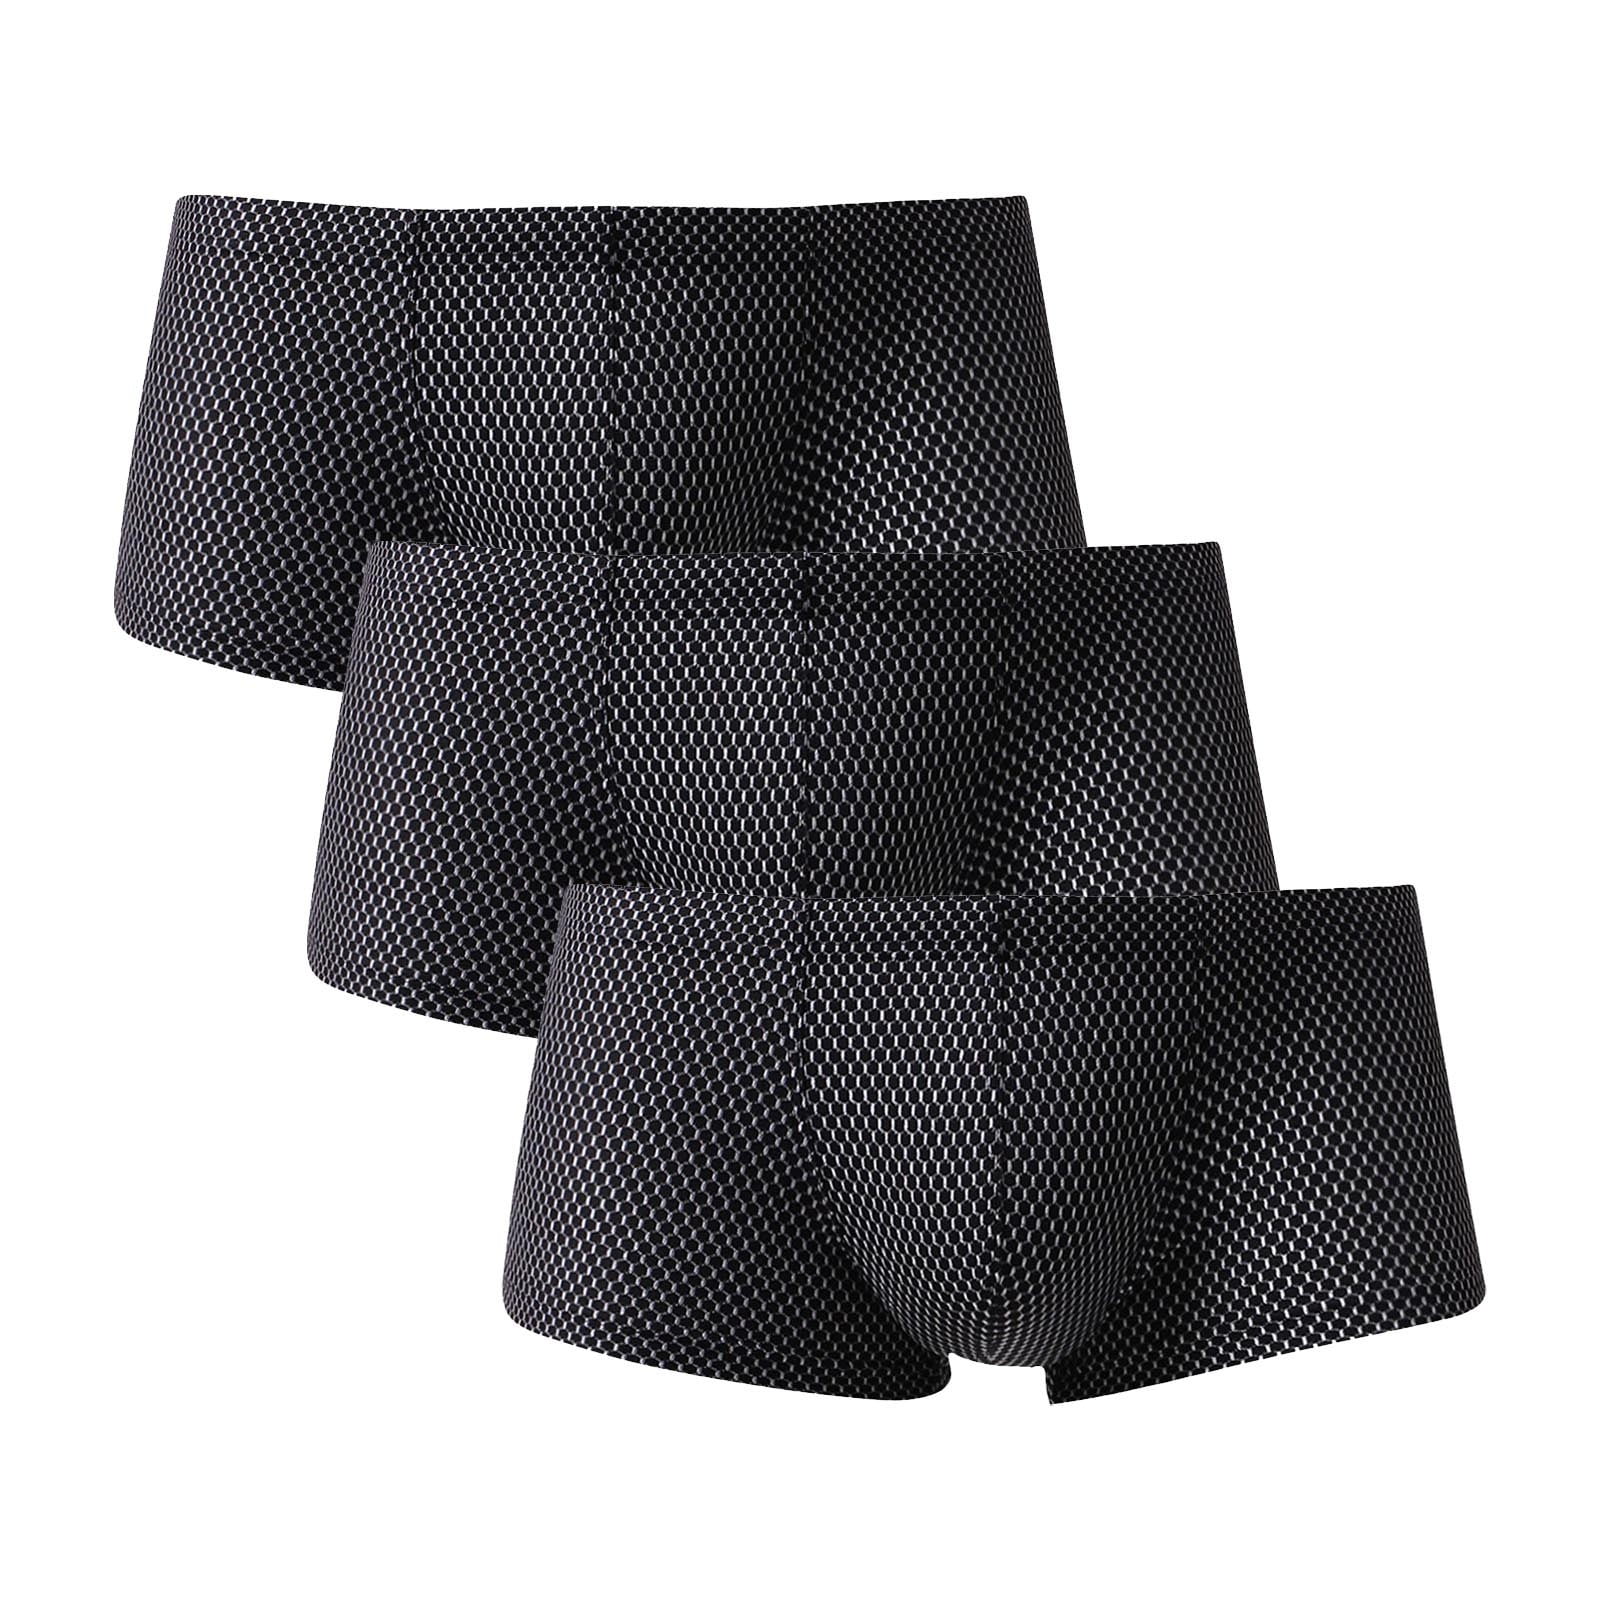 RPVATI Men's Comfort Solid Underwear Soft Low Rise Soft Pouch Trunks 3 ...